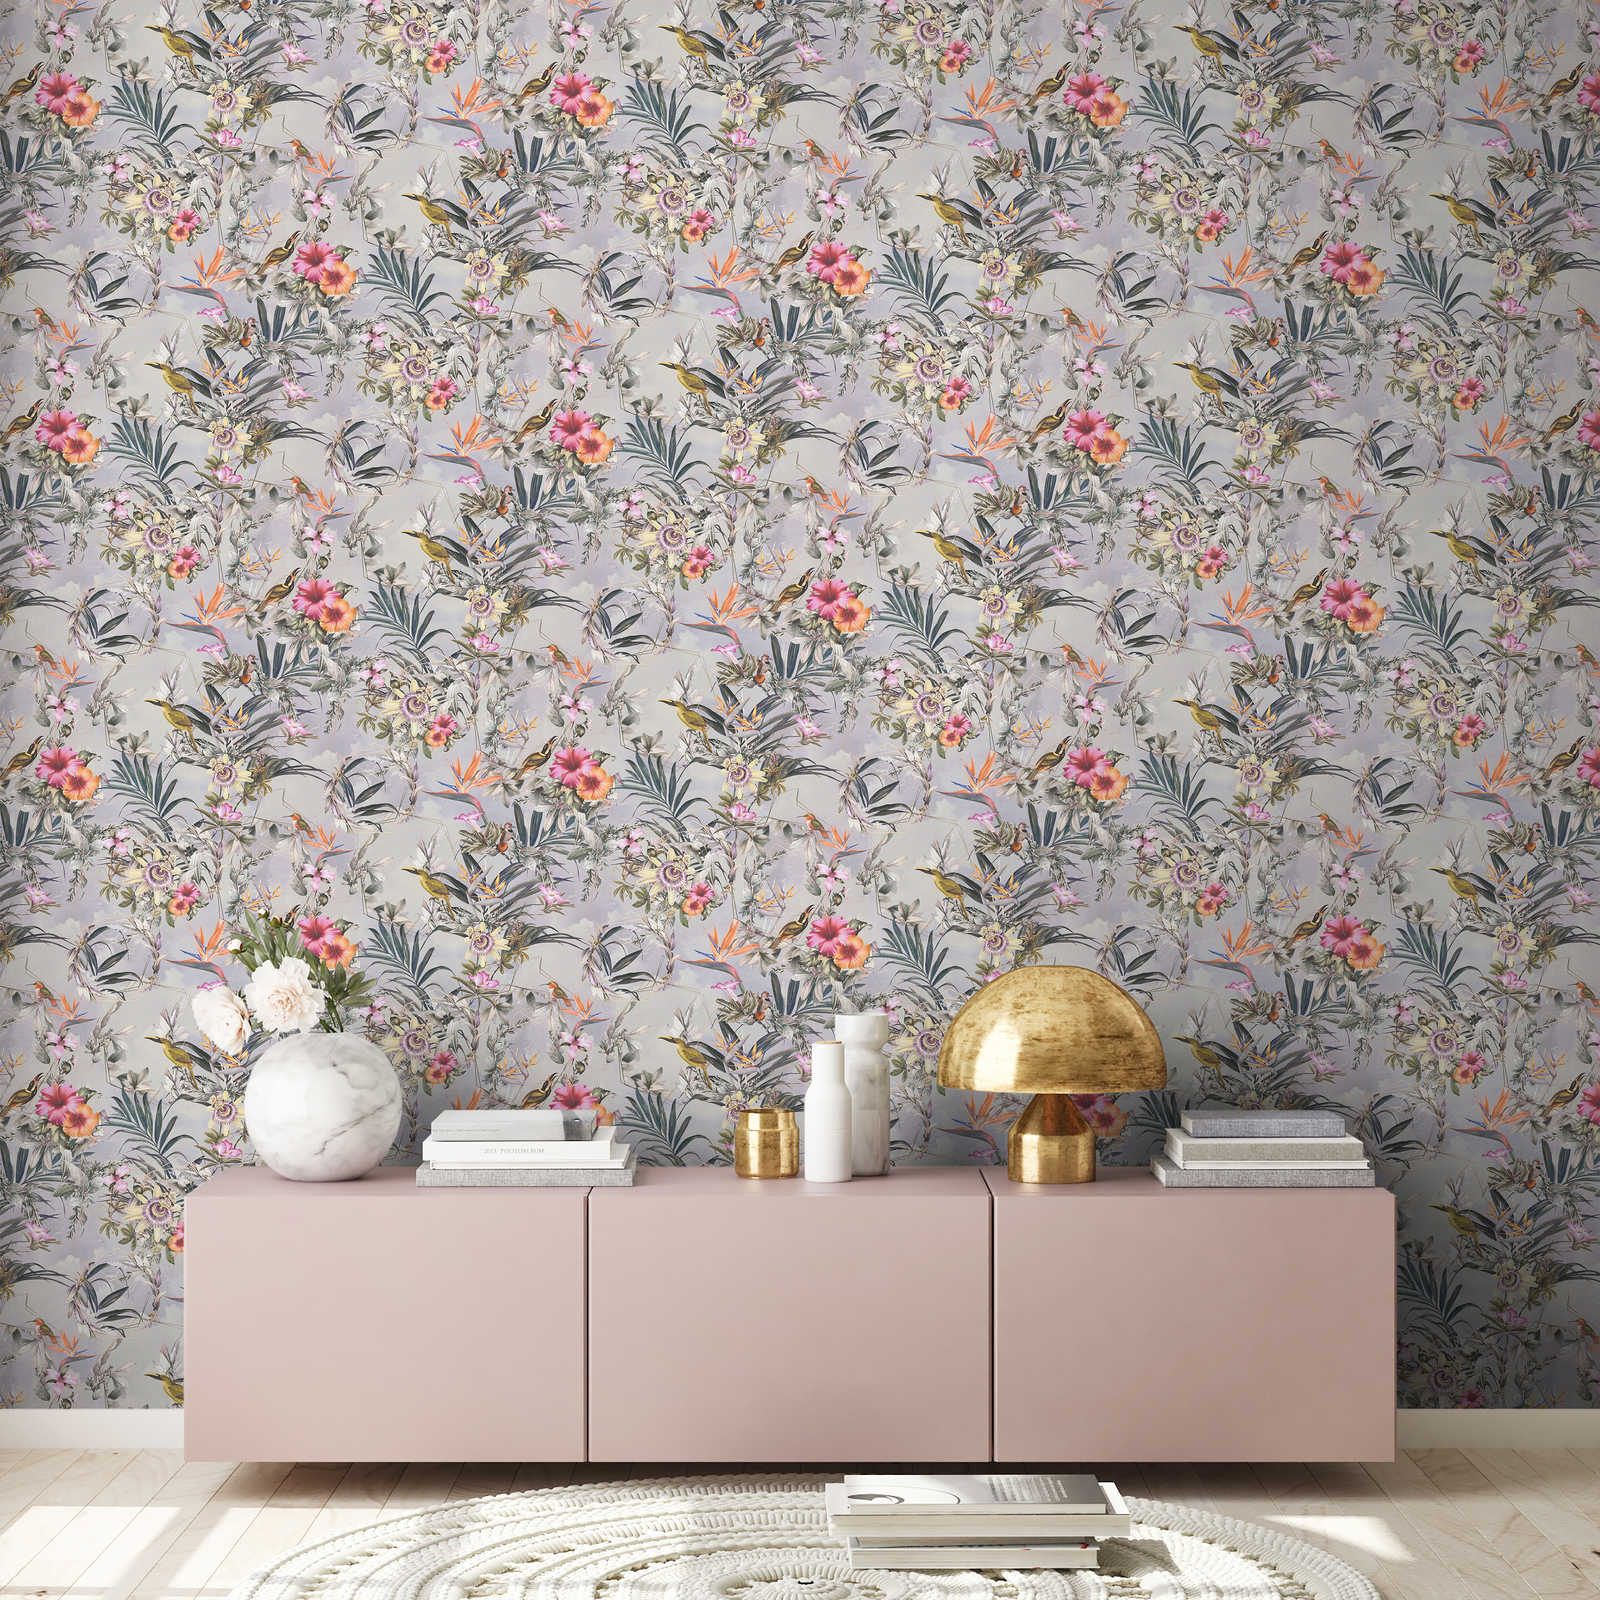             Flowers wallpaper exotic flowers & birds - grey, green, pink
        